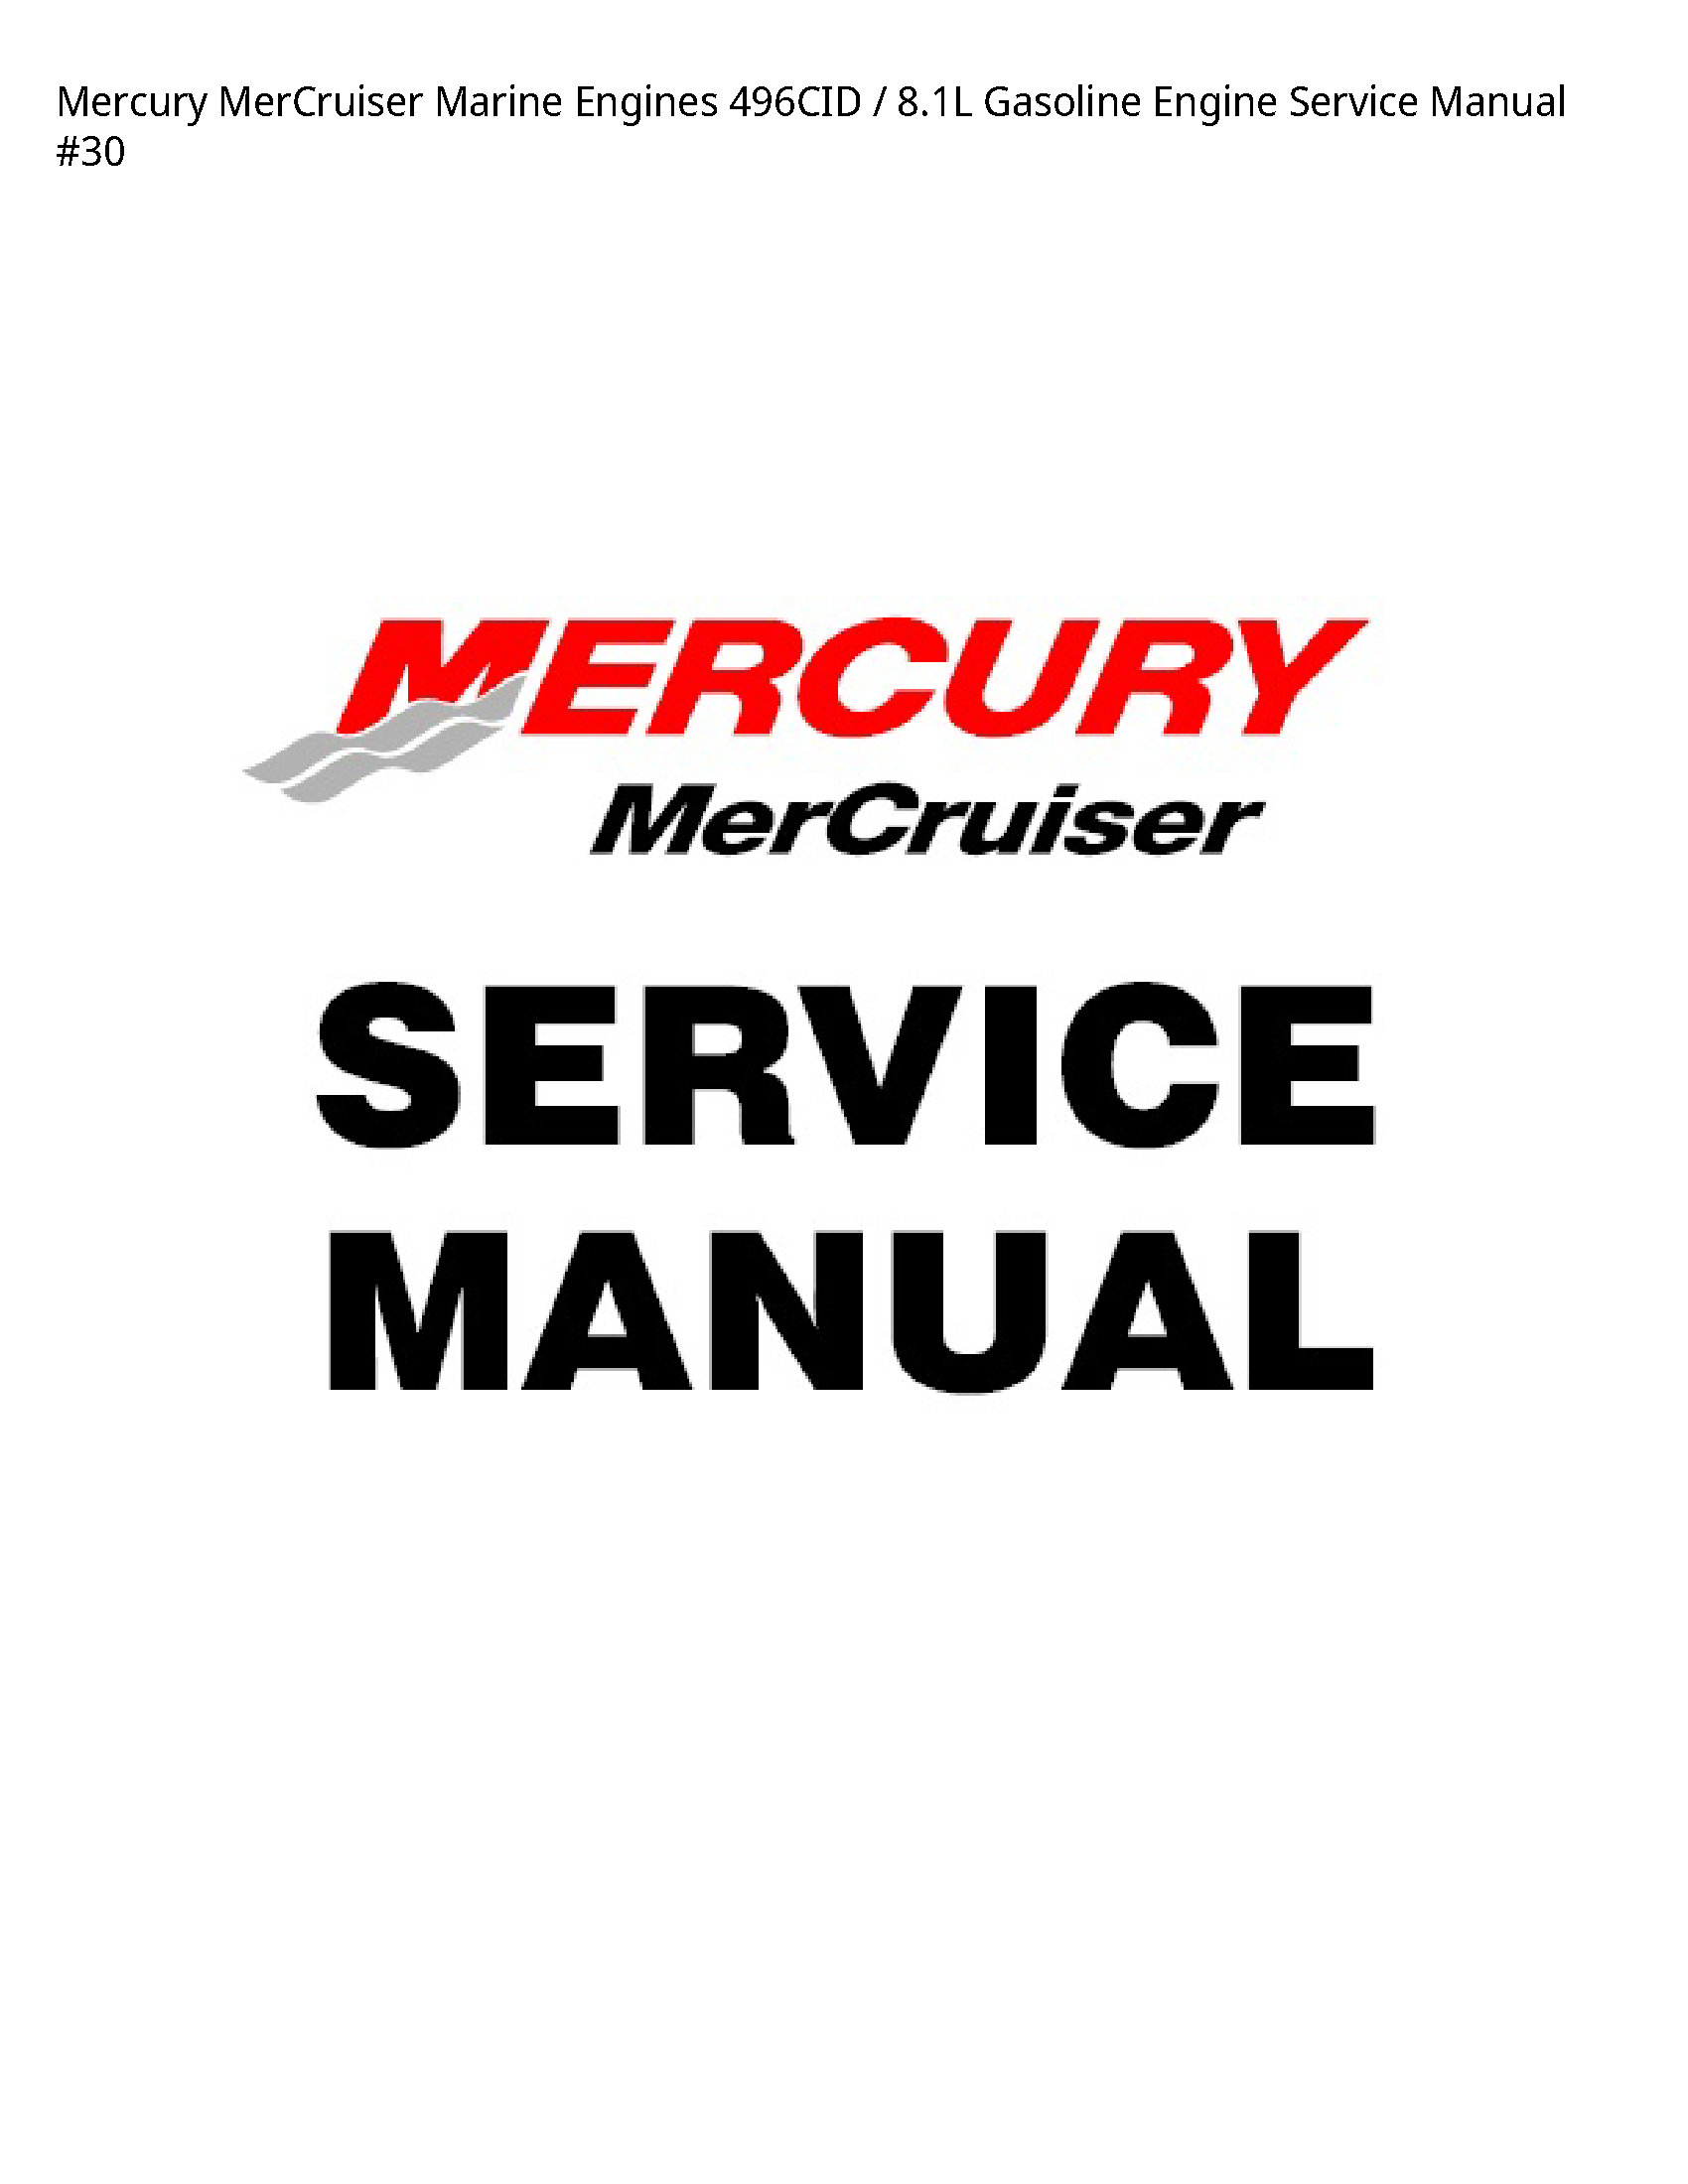 Mercury 496CID MerCruiser Marine Engines Gasoline Engine Service manual